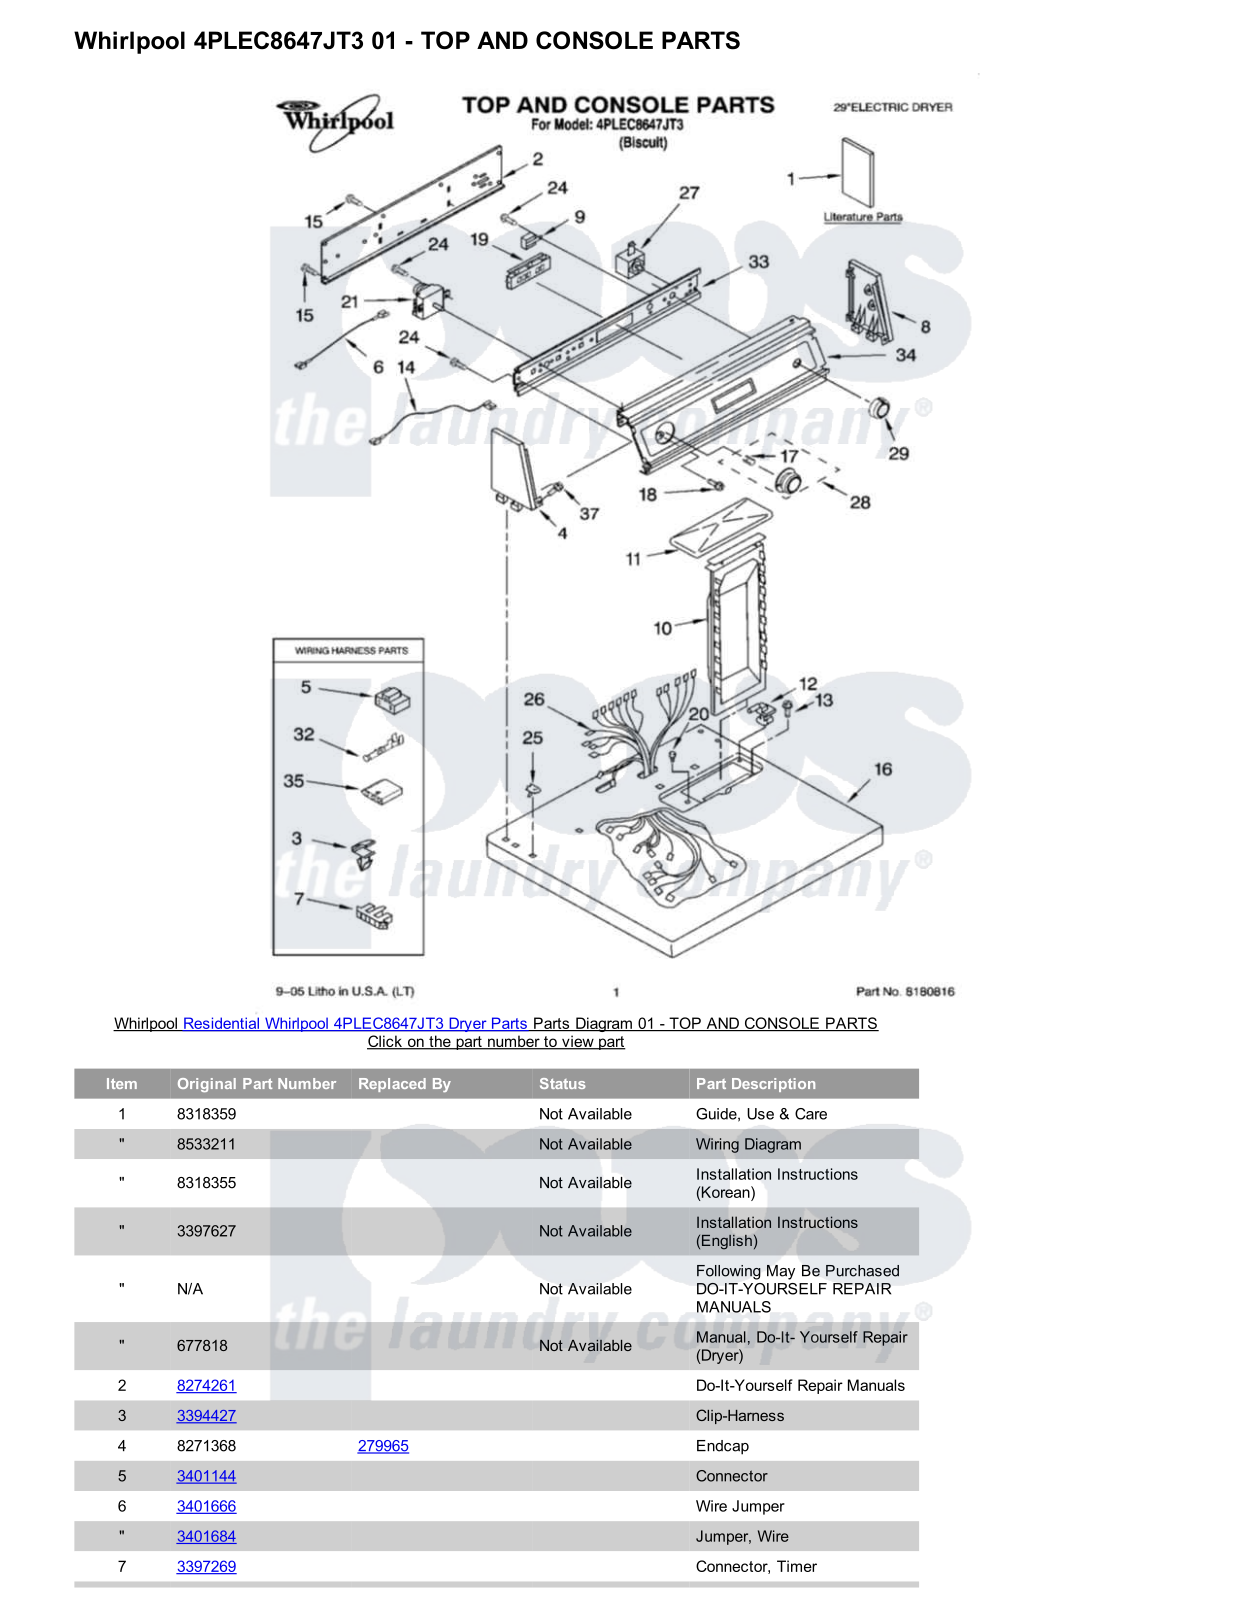 Whirlpool 4PLEC8647JT3 Parts Diagram